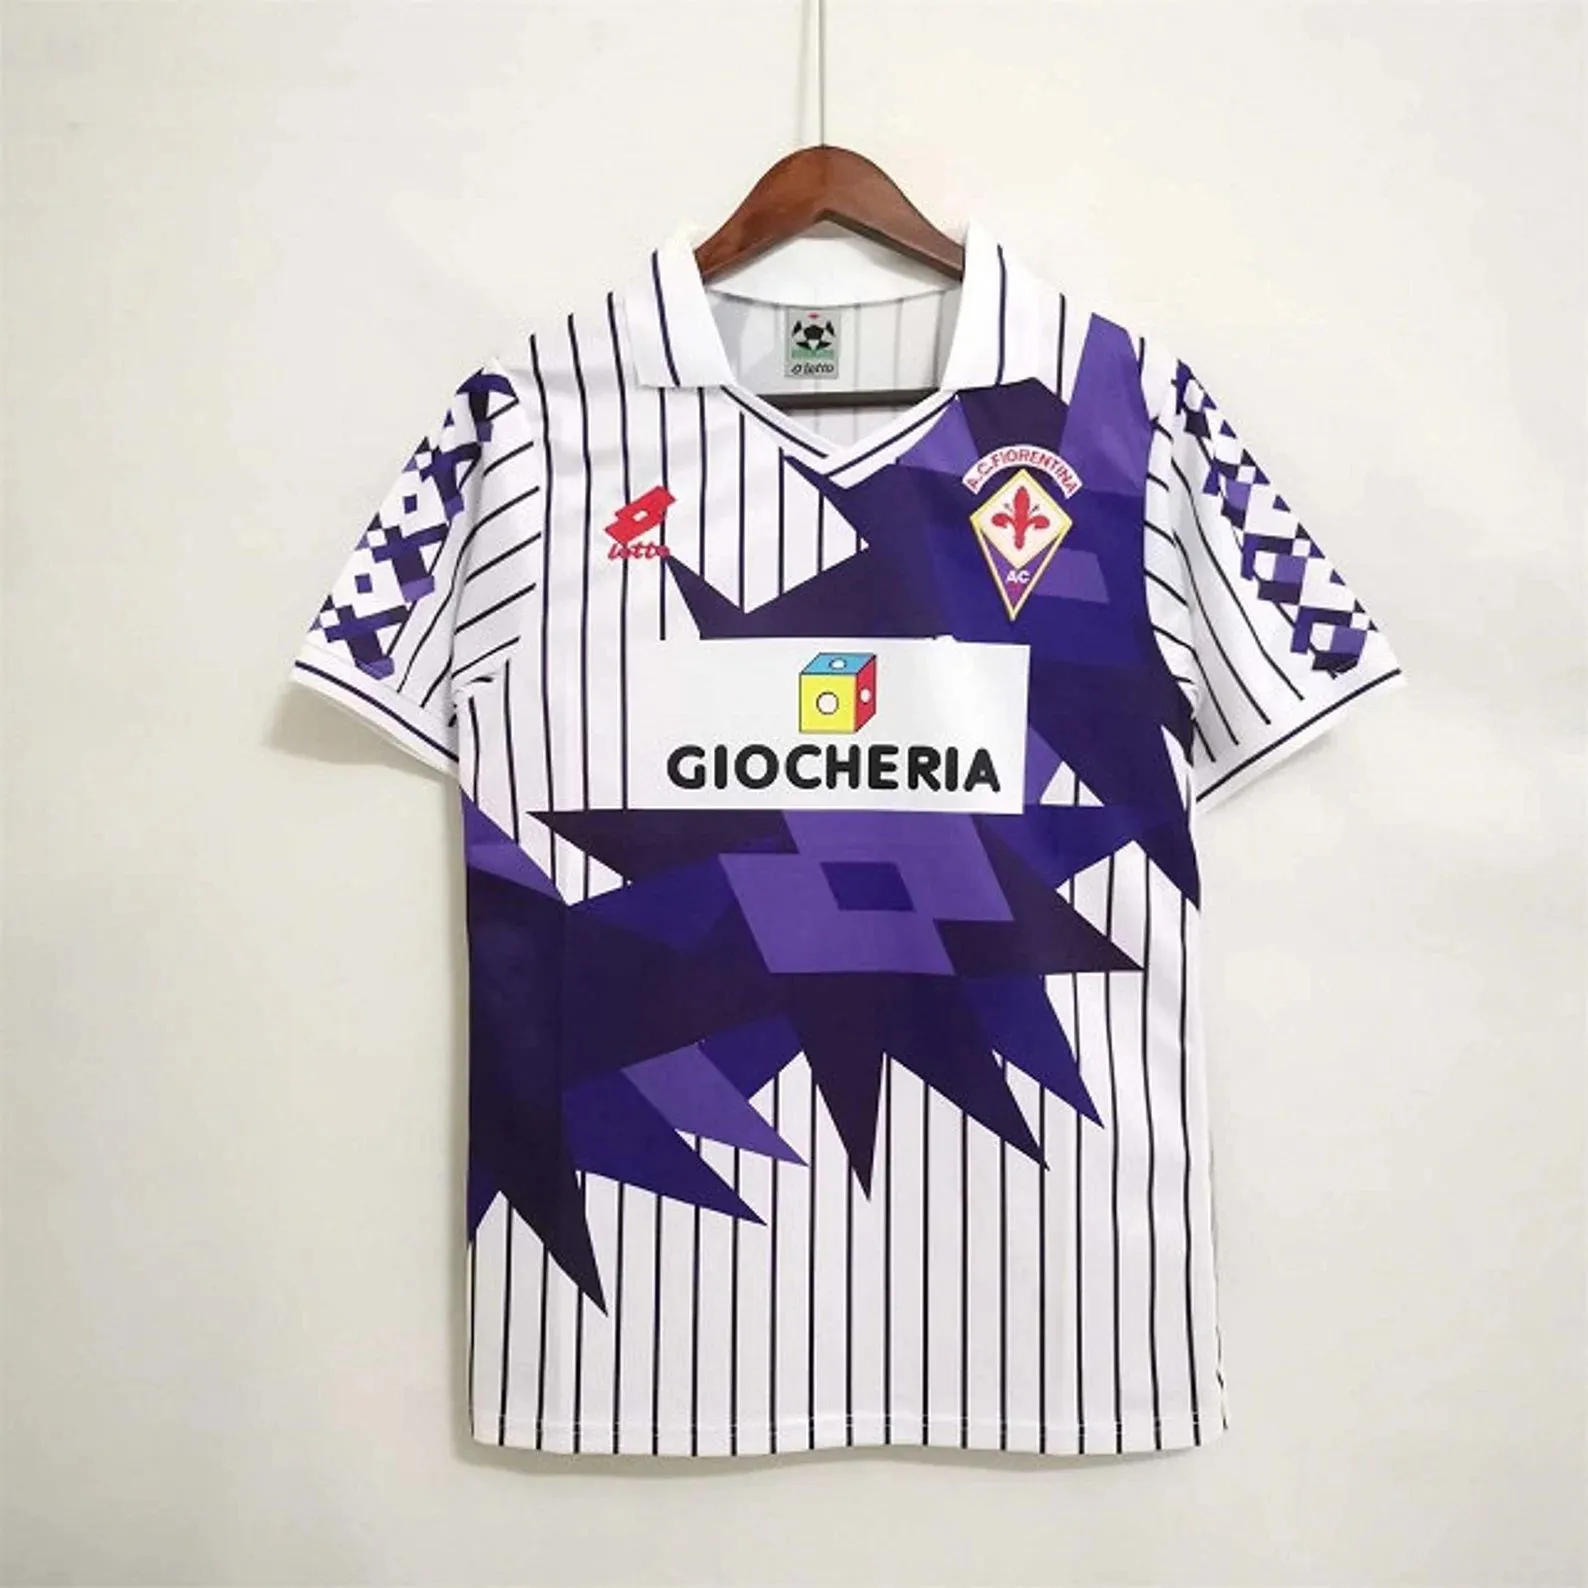 The Fiorentina 1991/1992 Away Retro Jersey on Porttore.com: A Timeless Classic for the True Viola Fan